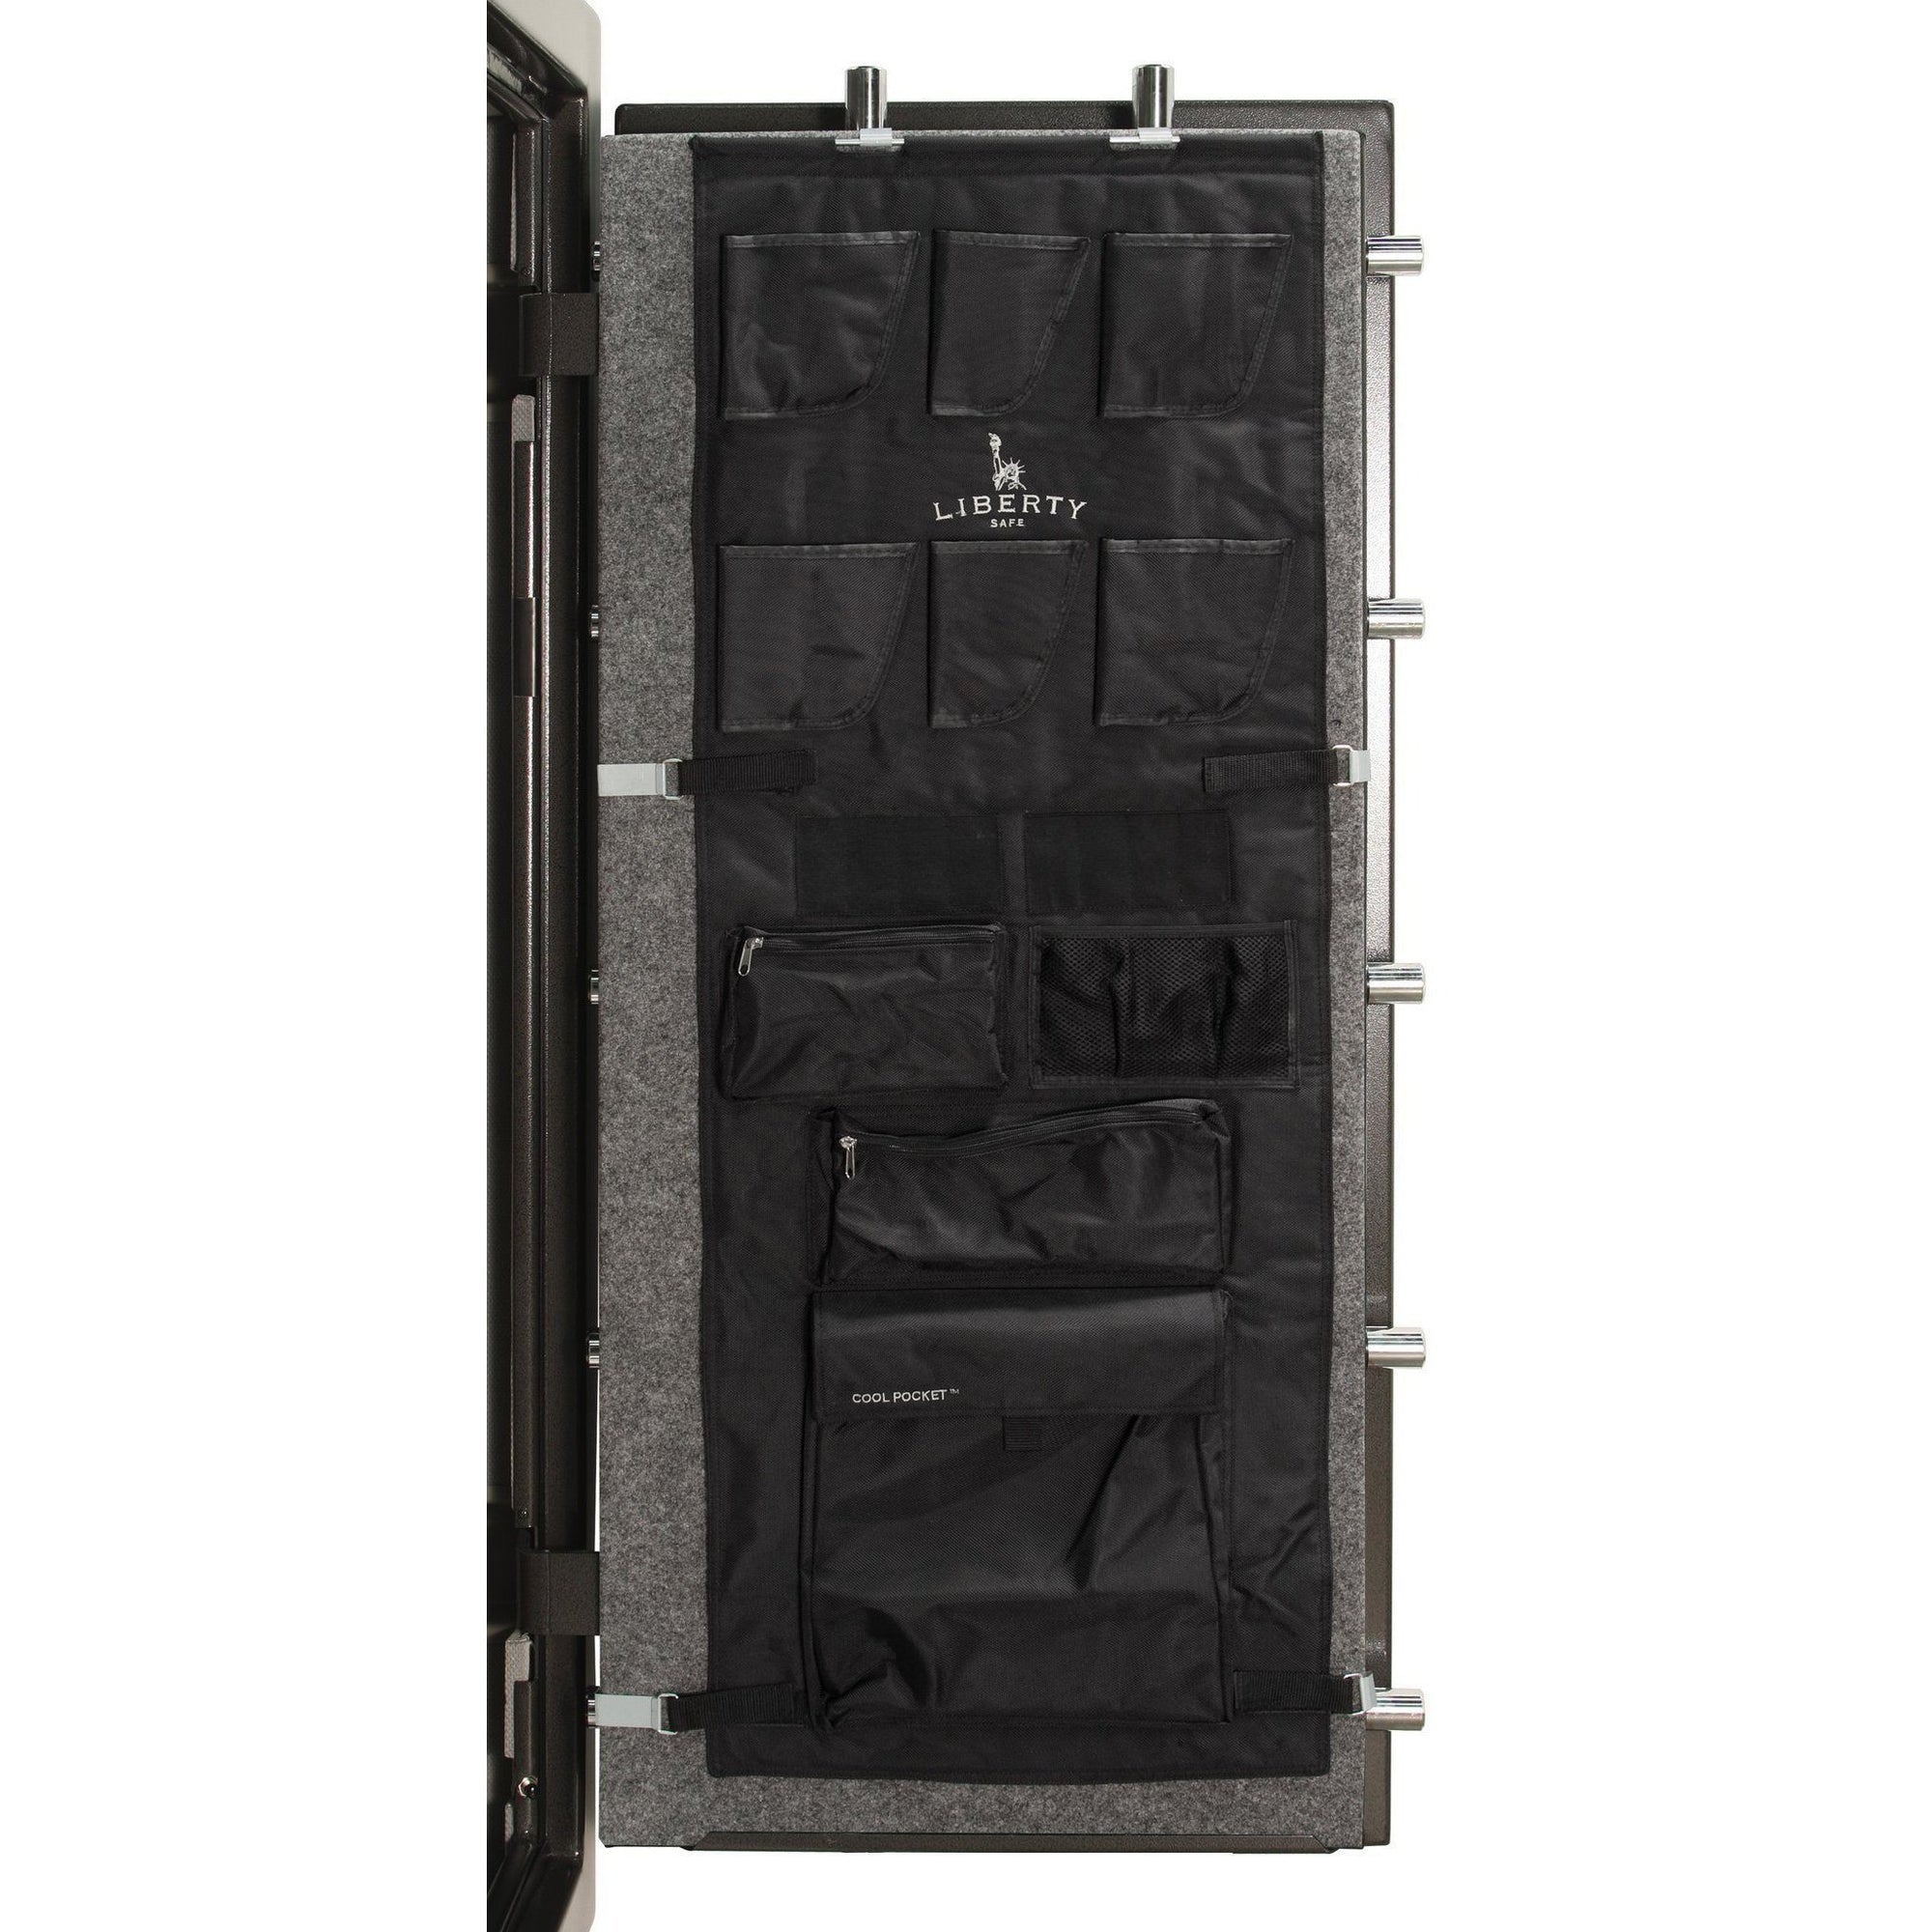 Accessory - Storage - Door Panel - 20-23-25 size safes